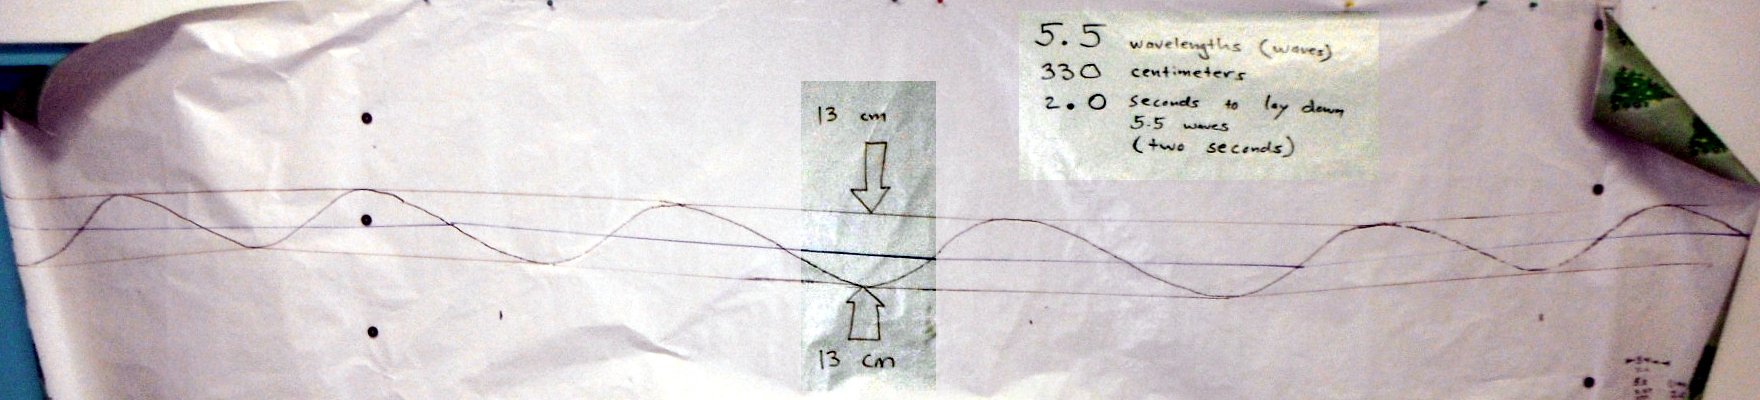 RipStik sine sinusoidal wave form